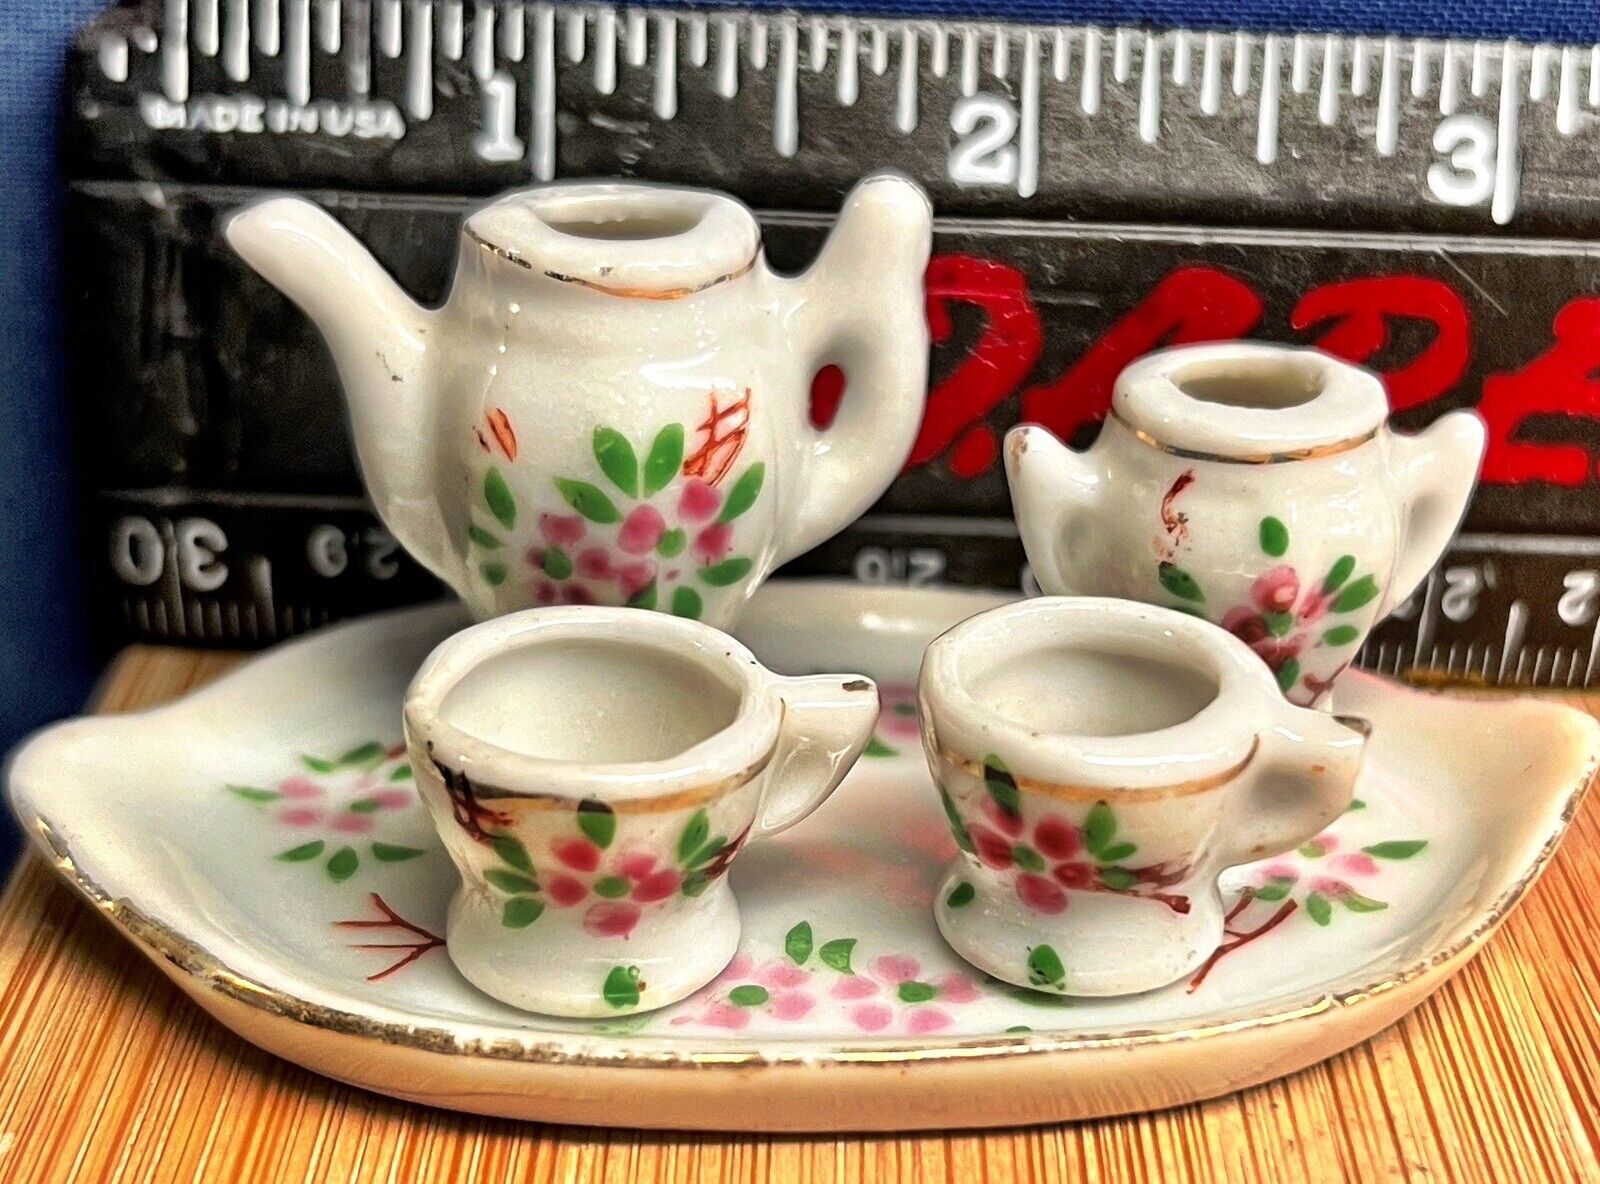 Vintage 1940's Vintage Miniature Tea Set made in Occupied Japan By H Kato.